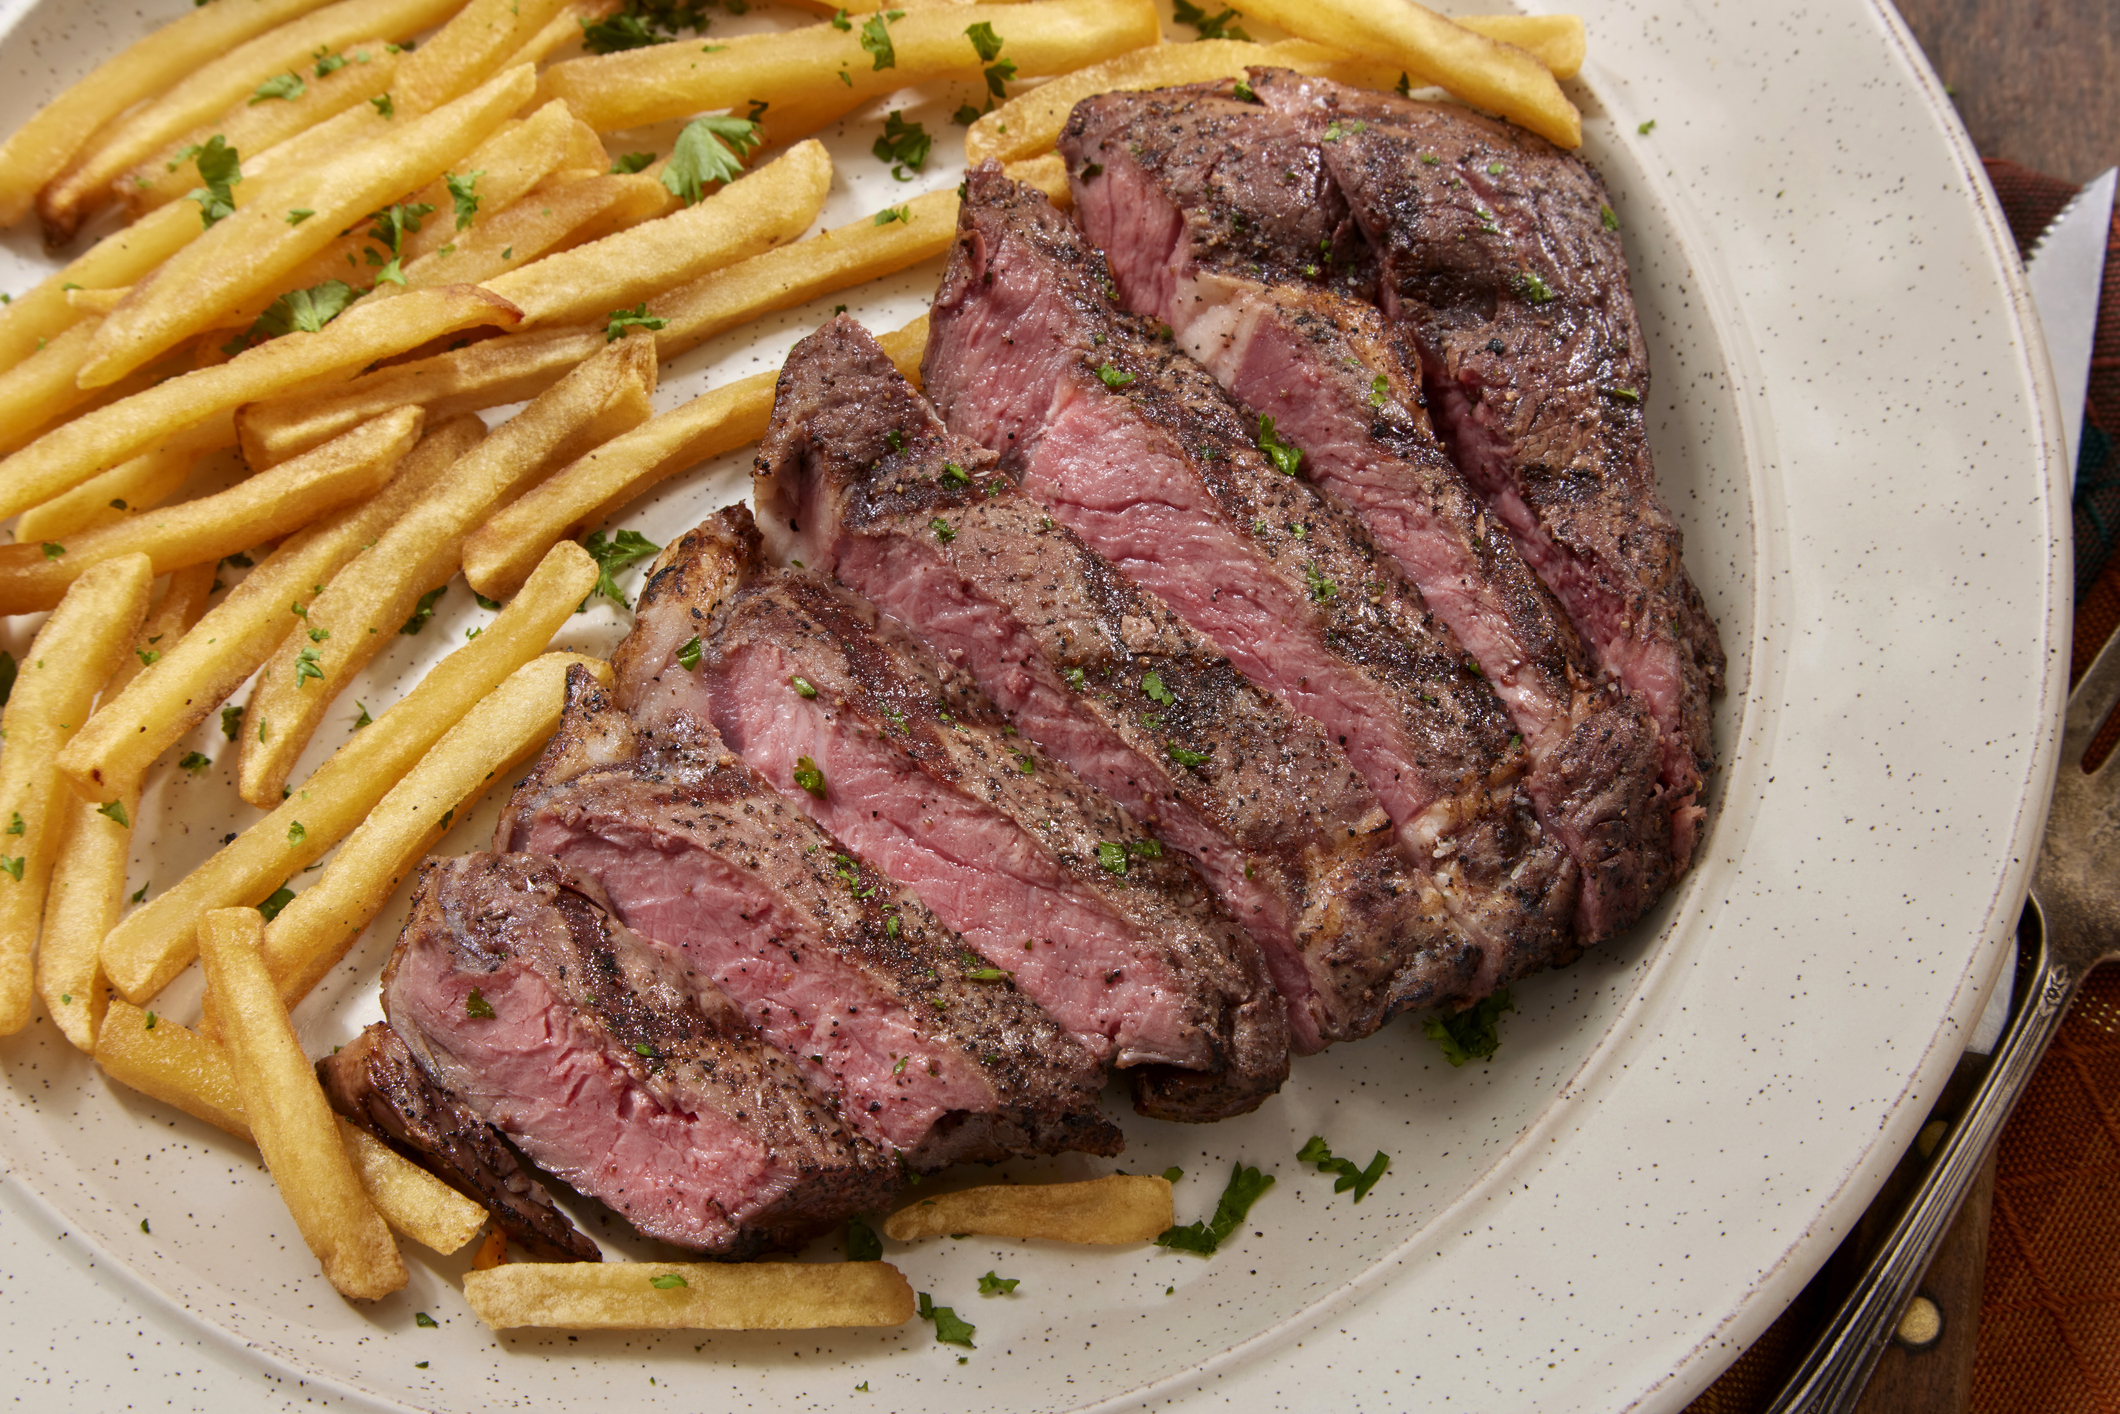 A plate of sliced steak alongside seasoned fries garnished with parsley